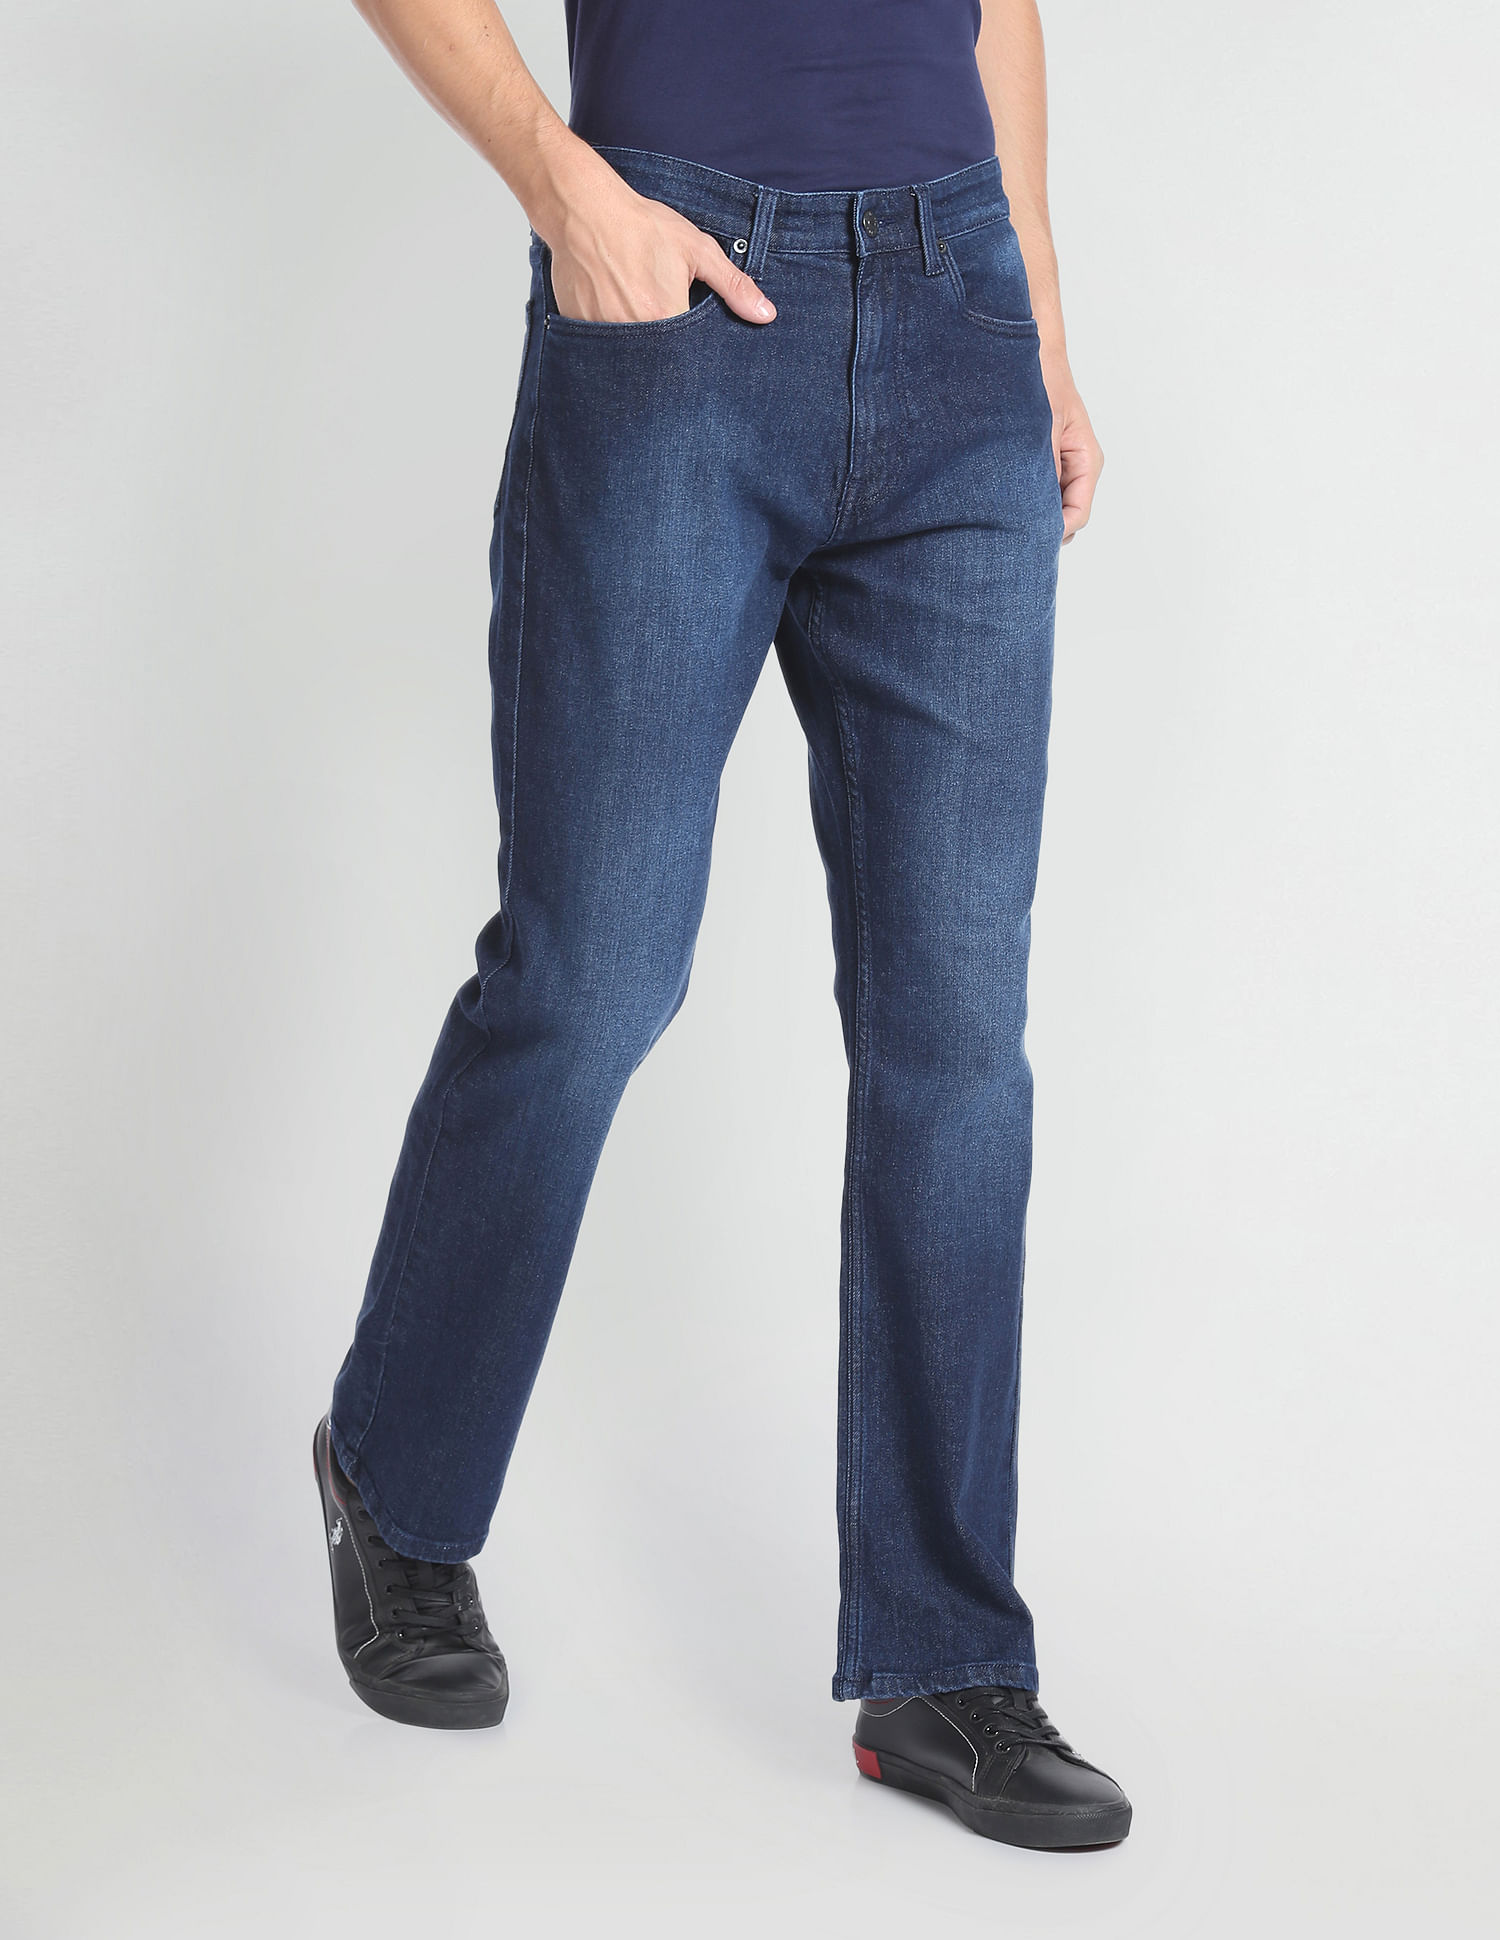 Men's Slim Fit Jeans - Goodfellow & Co™ Black Denim 34x30 : Target